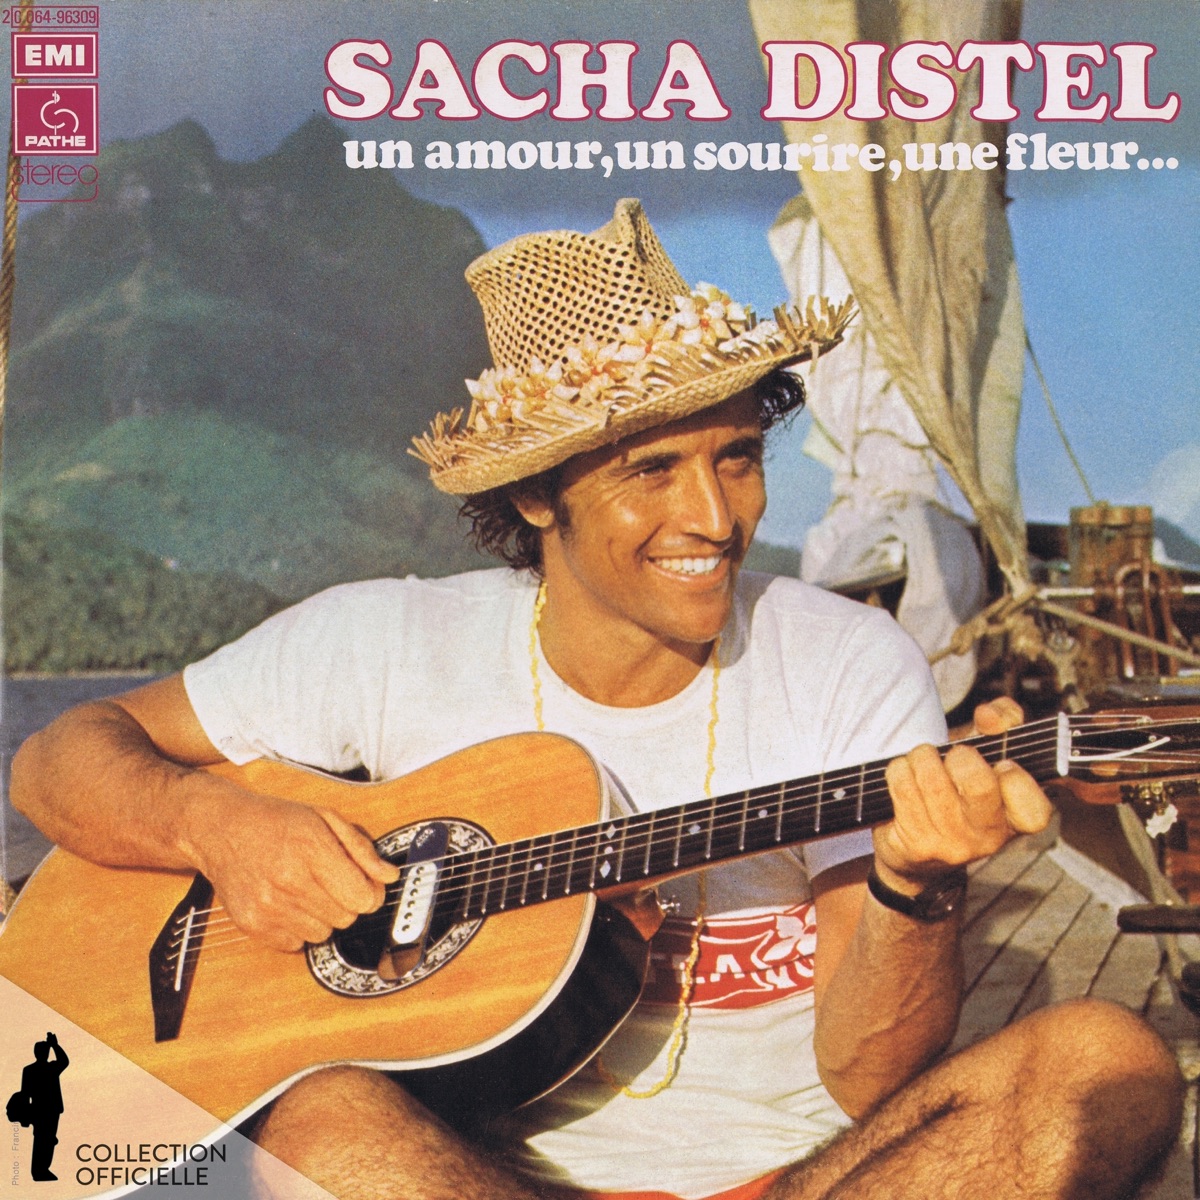 The Very Best of Sacha Distel: 22 Essential Songs - Album by Sacha Distel -  Apple Music